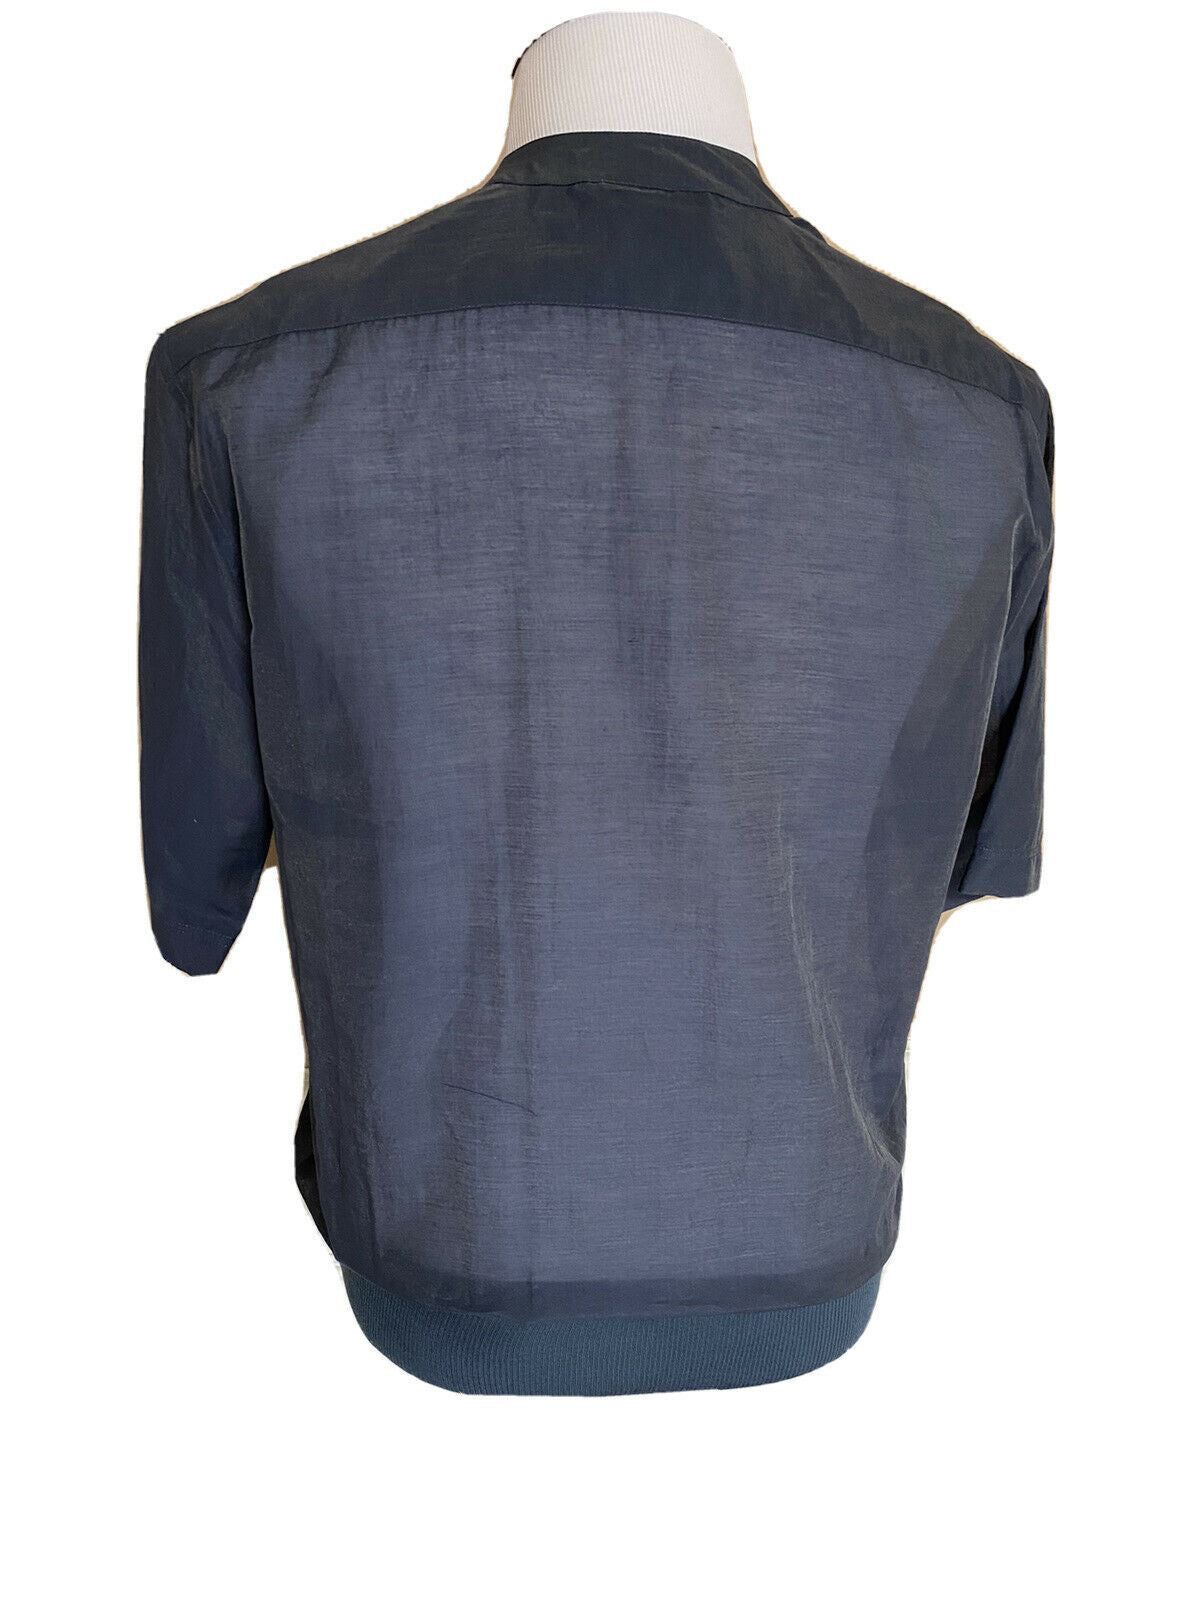 NWT $545 Emporio Armani Modern Blue Korean-Necked Short Sleeve L Shirt  21CF7T